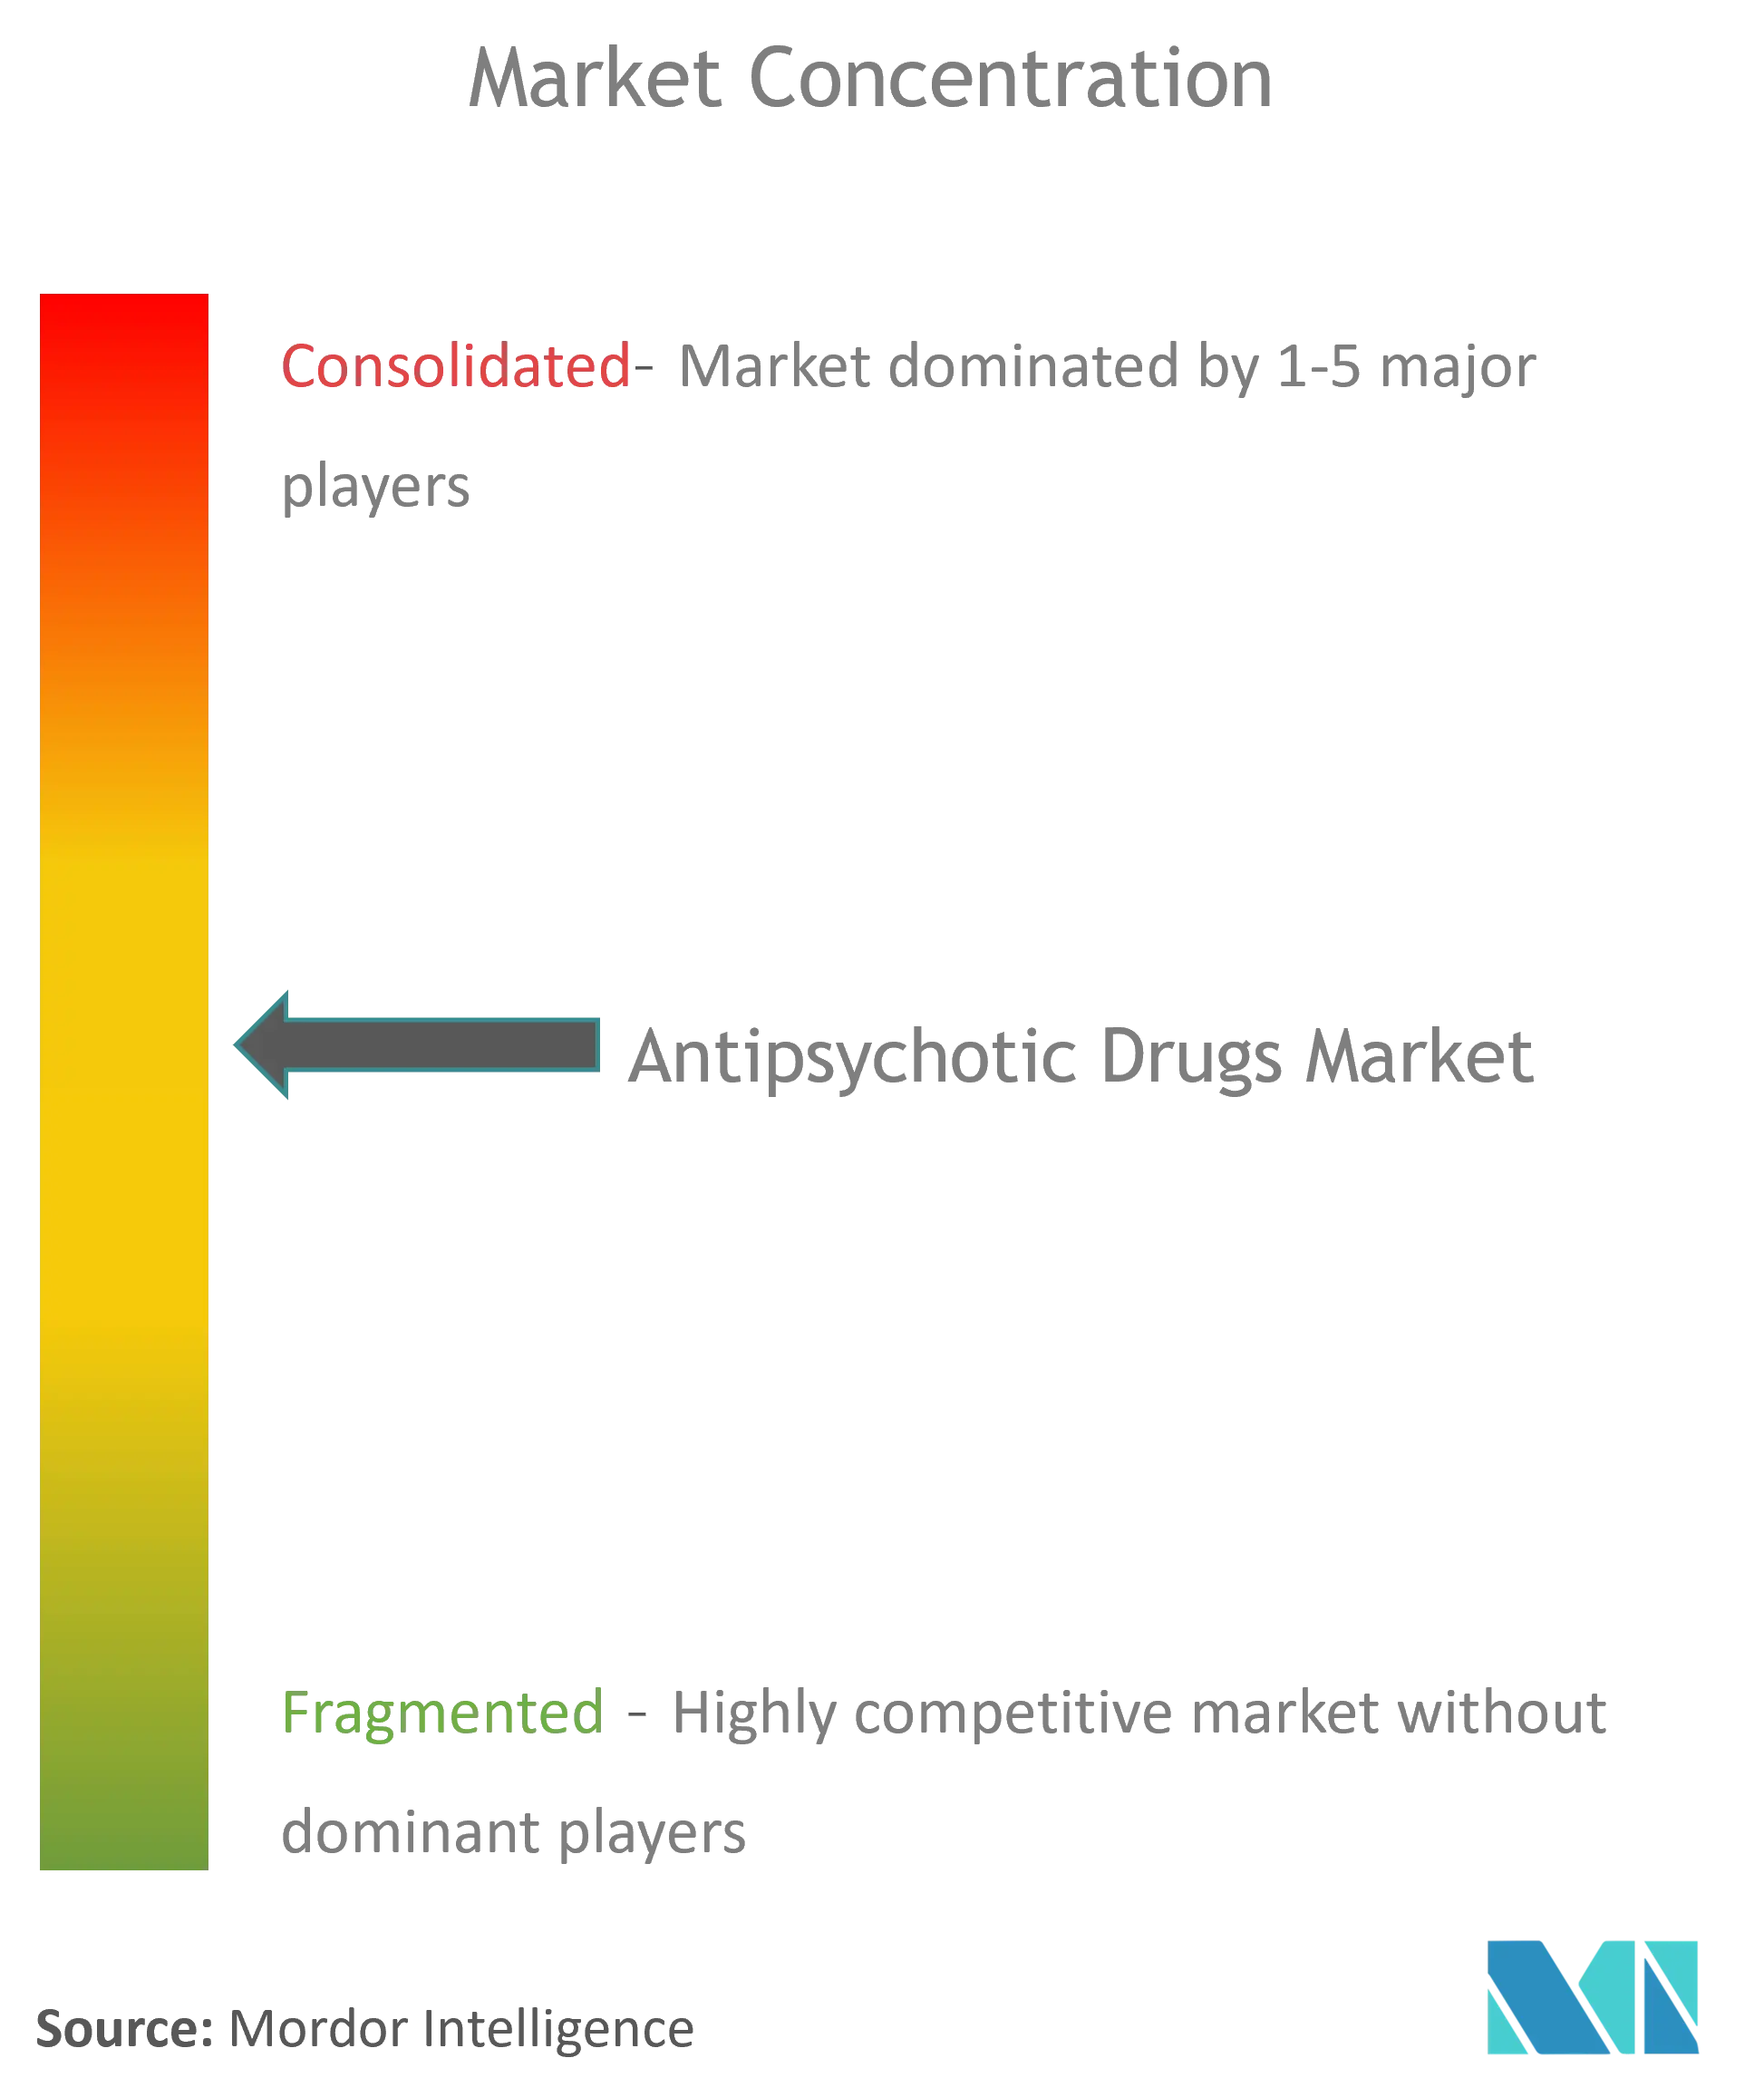 Antipsychotic Drugs Market Concentration